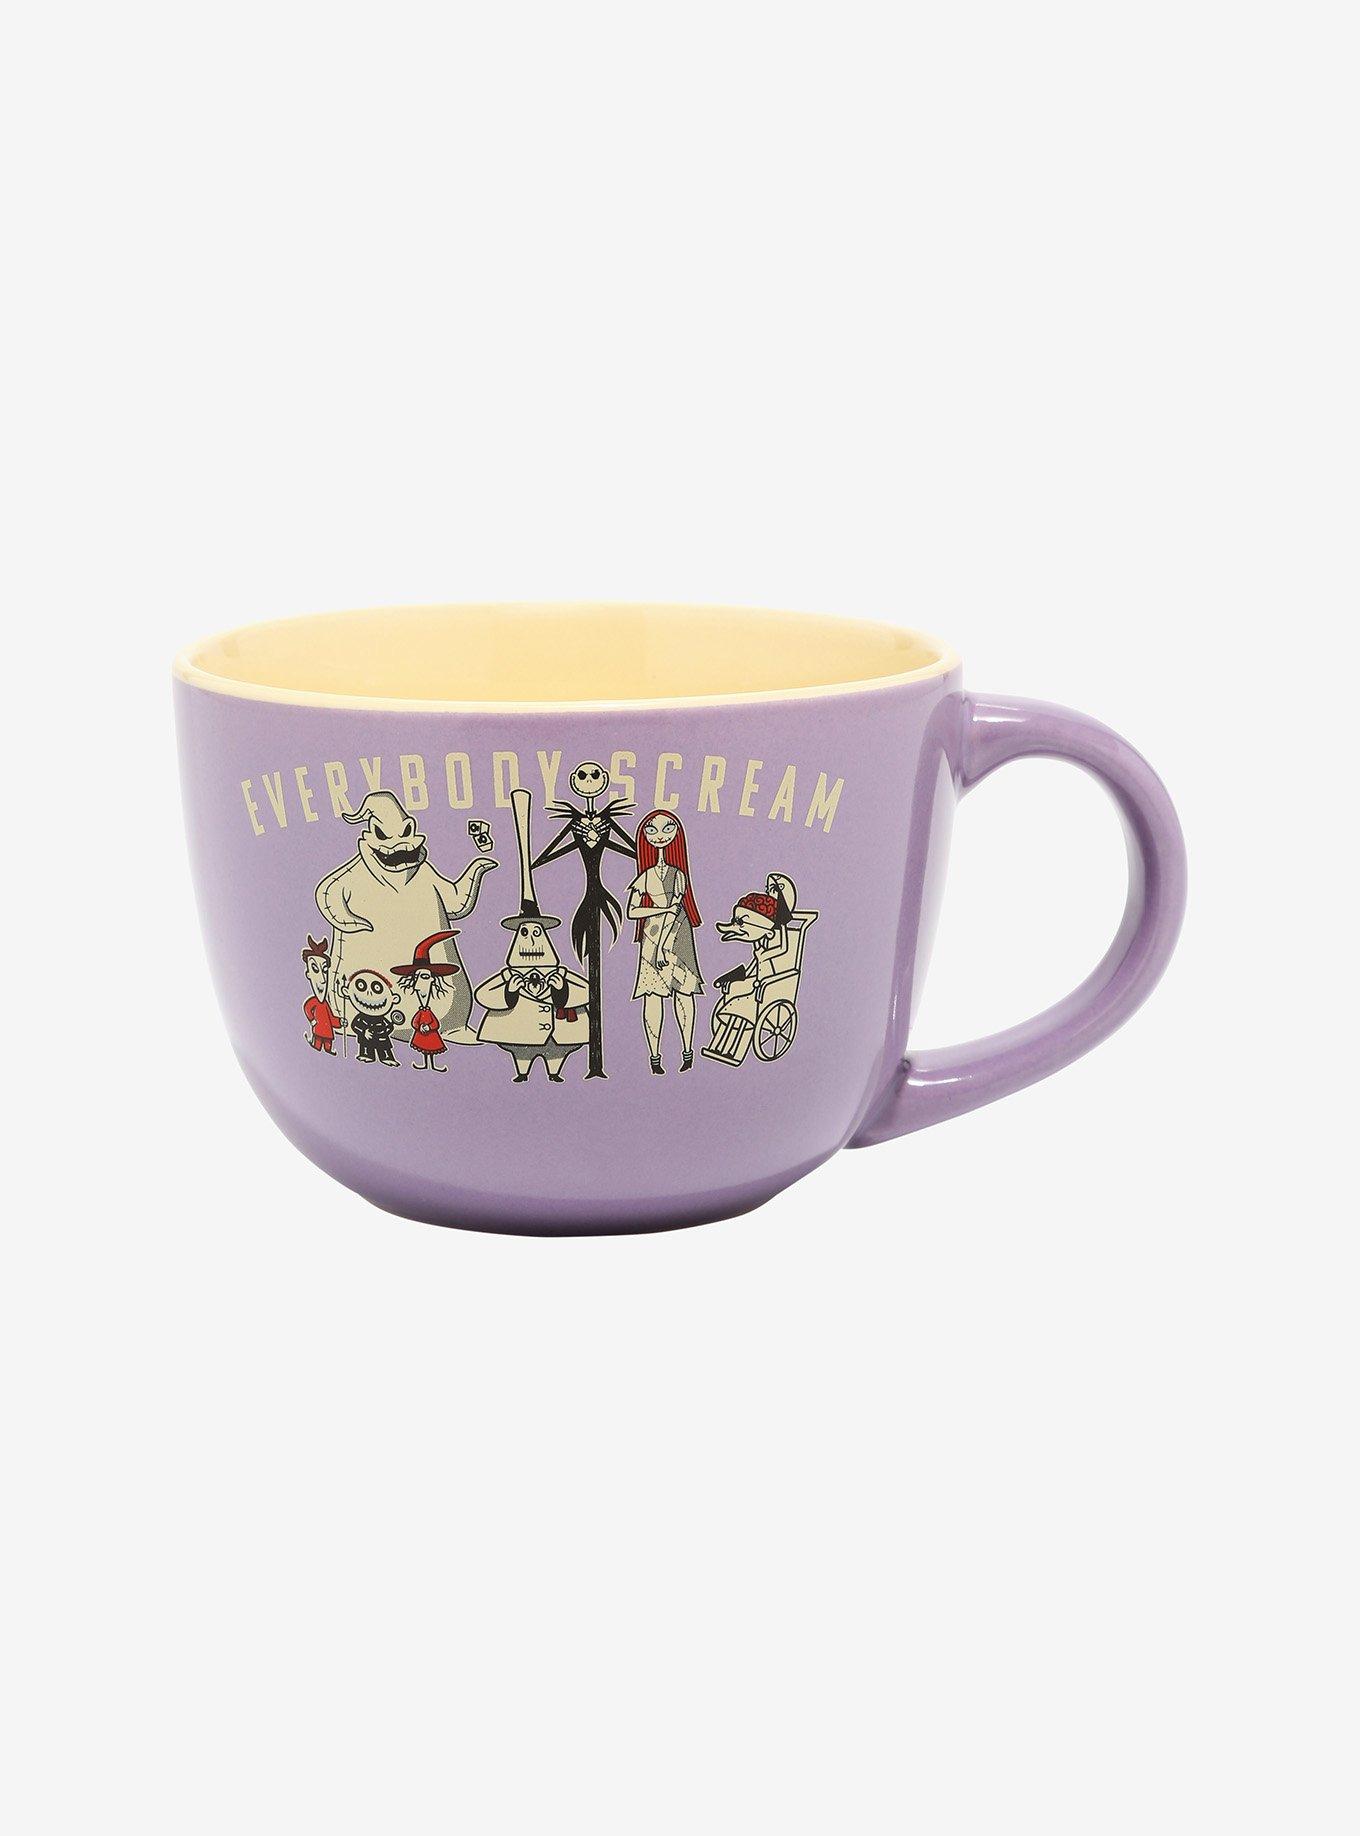 Details about   Walt Disney 'Twas the Night Before Christmas Coffee Tea Mug Cup 12 oz 